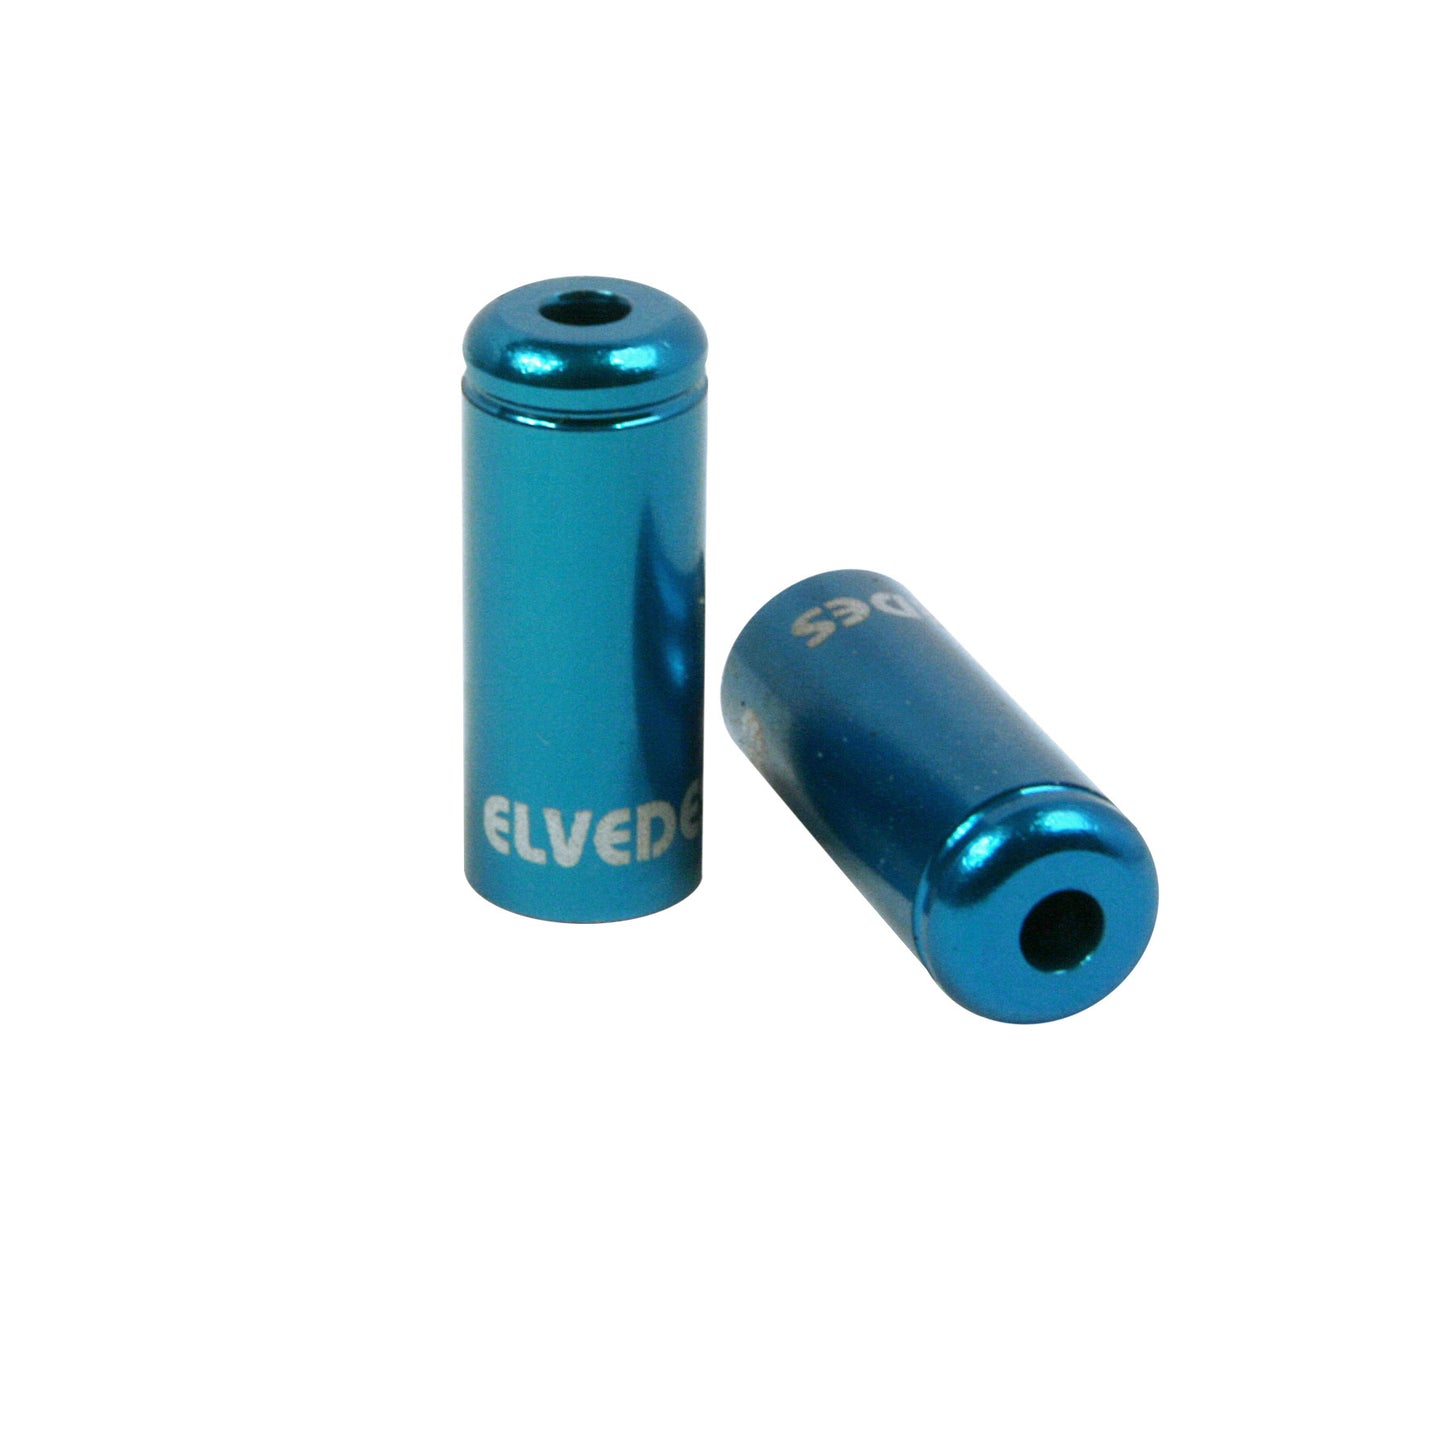 Elvedes Pot Kabelferrules 5.0mm | Aluminium | Blauw | P50